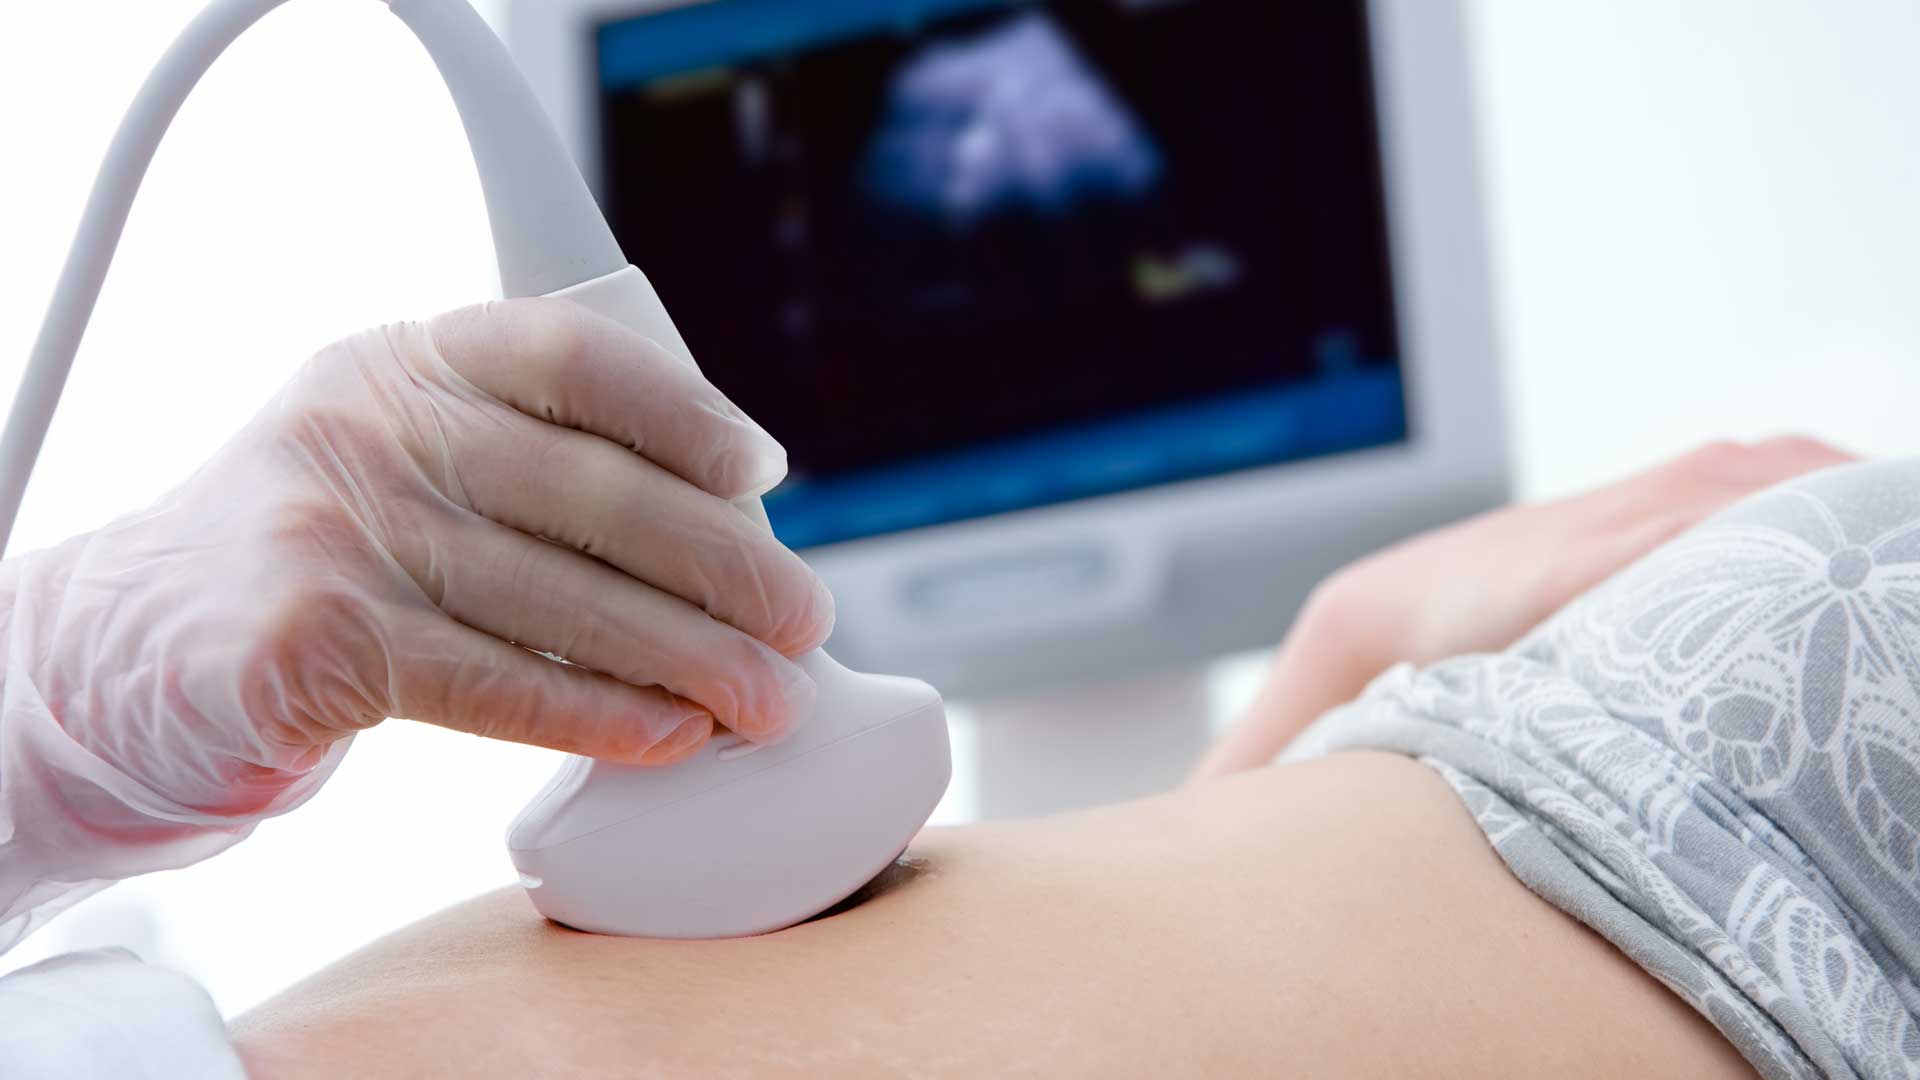 Advanced Ultrasound Scanning